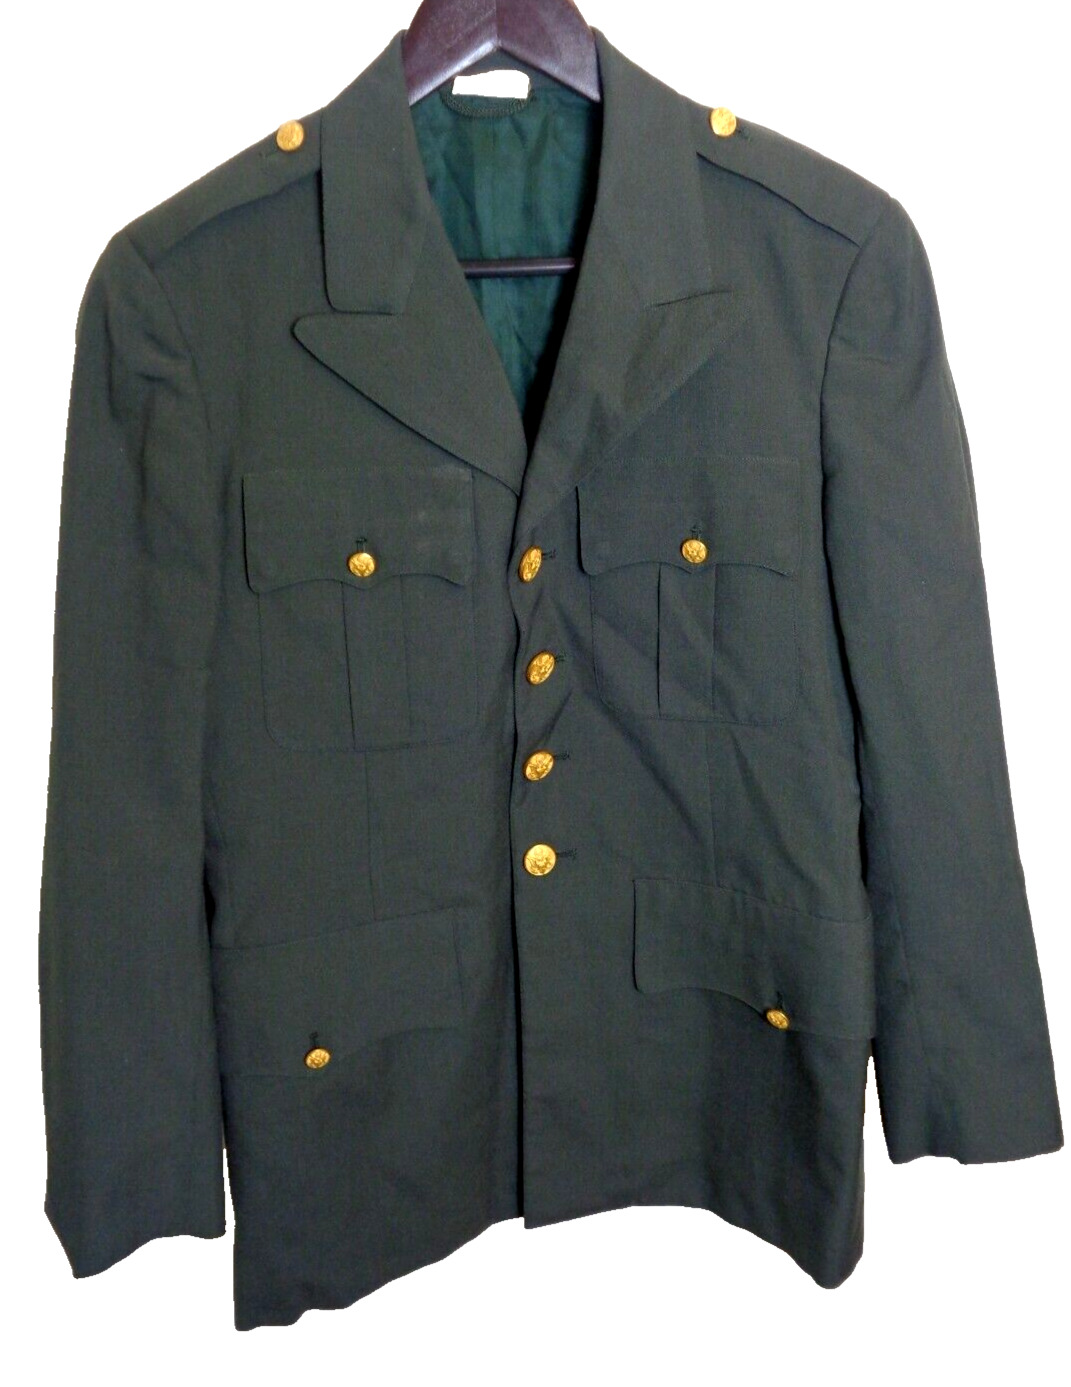 US Military Army Green Coat 37R Poly/Wool Blazer Jacket Uniform Men's